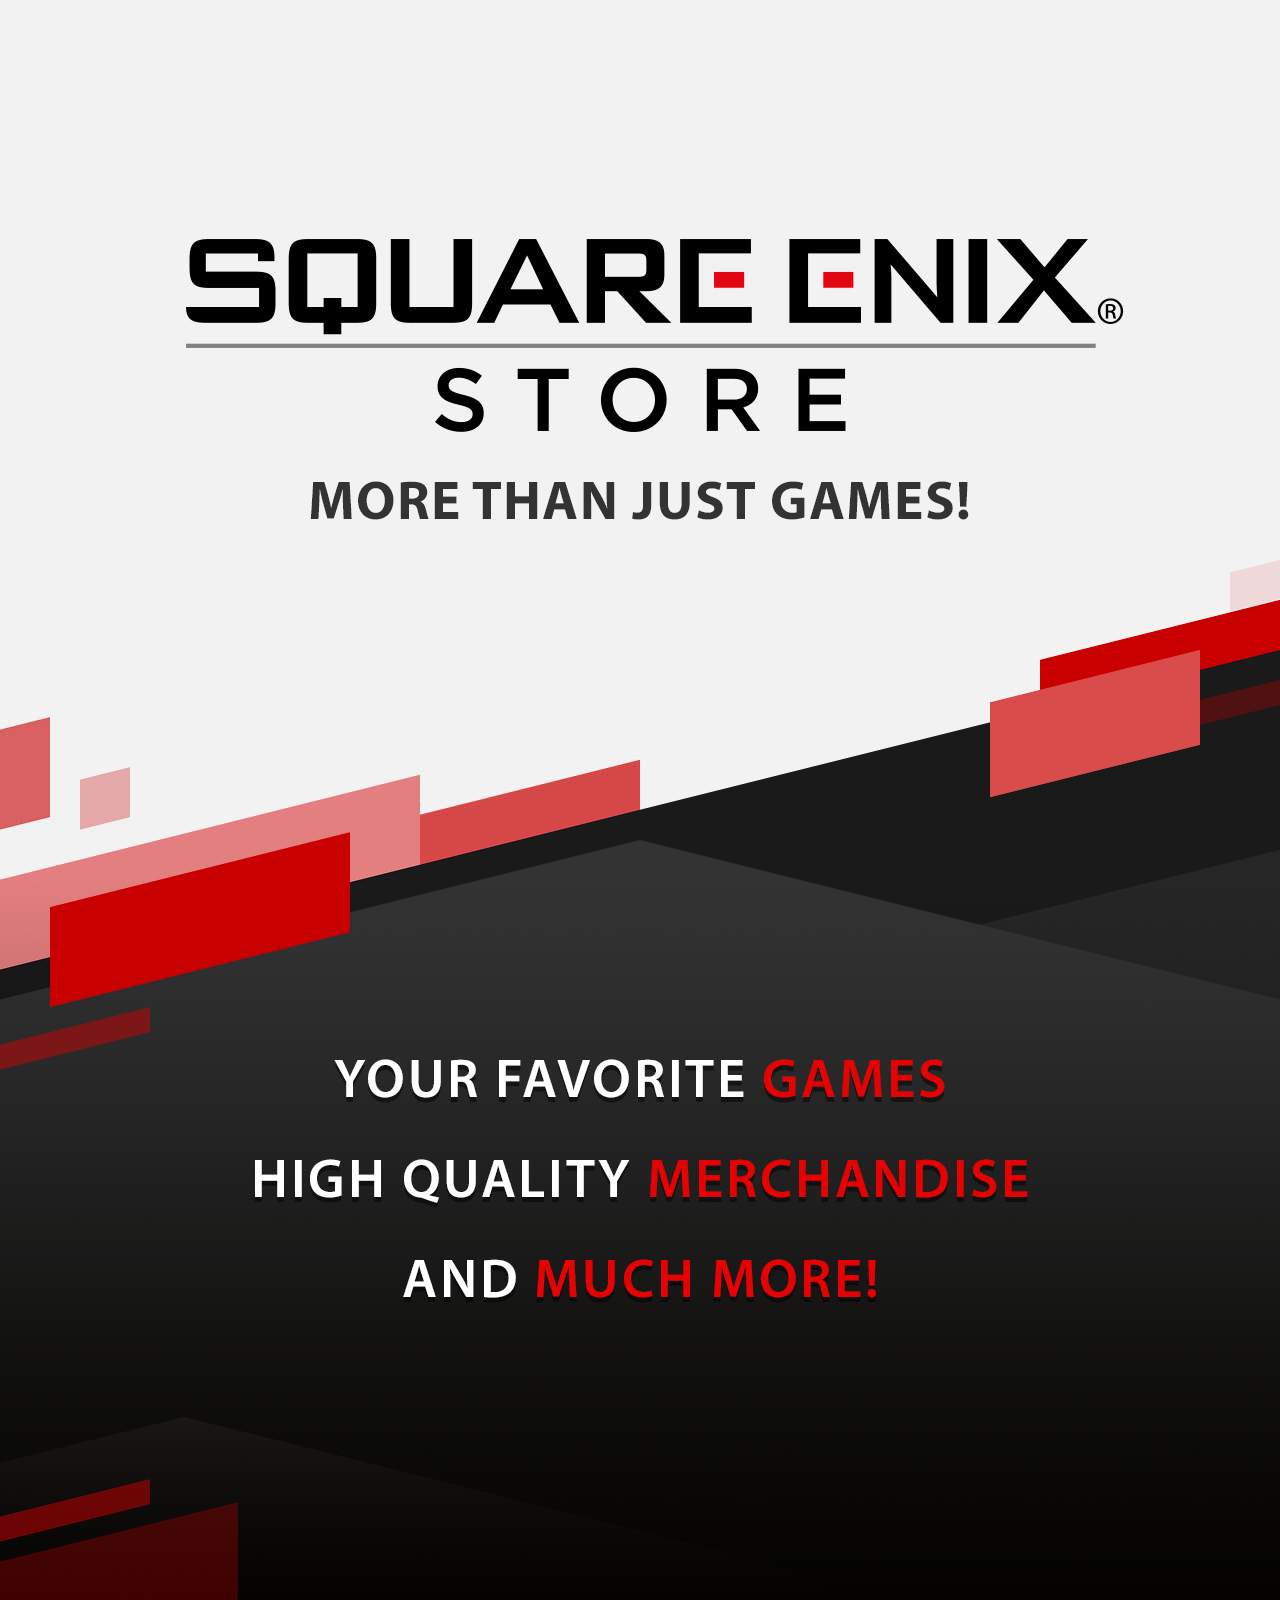  PowerWash Simulator - Nintendo Switch (Game Download Code in  Box) : Square Enix LLC: Everything Else